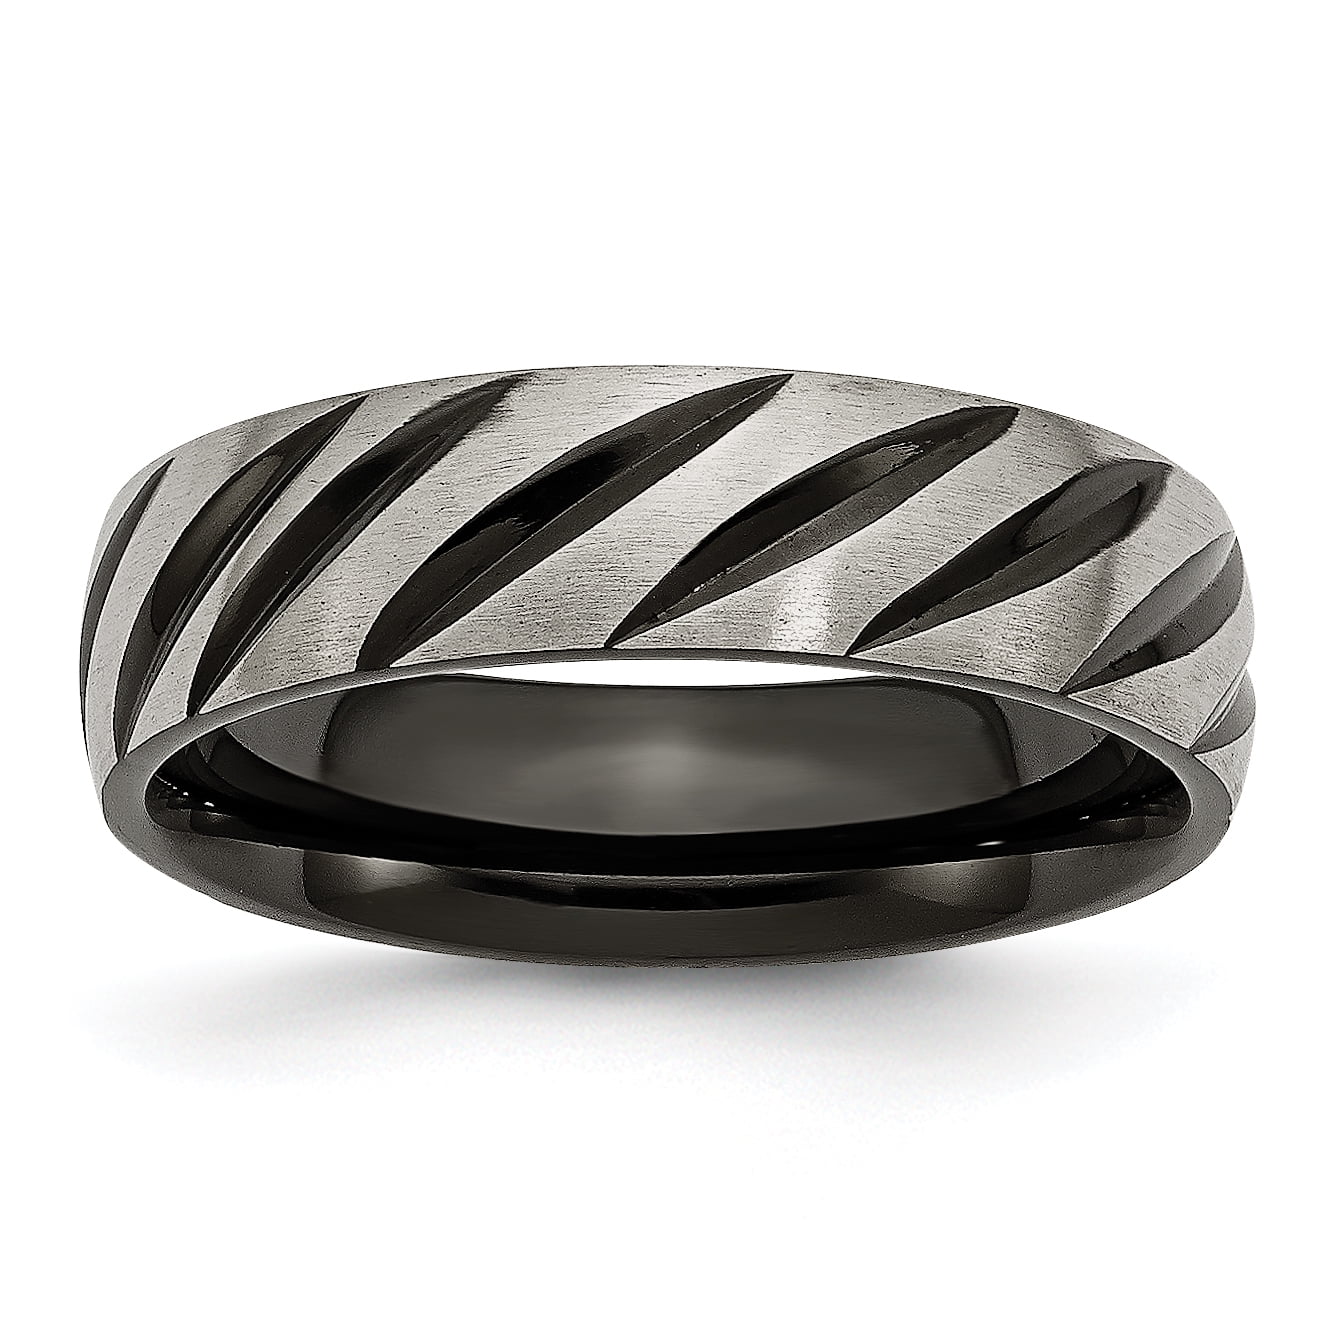 Perfect Jewelry Gift Titanium Swirl Design Black IP-plated 6mm Brushed/Polished Band